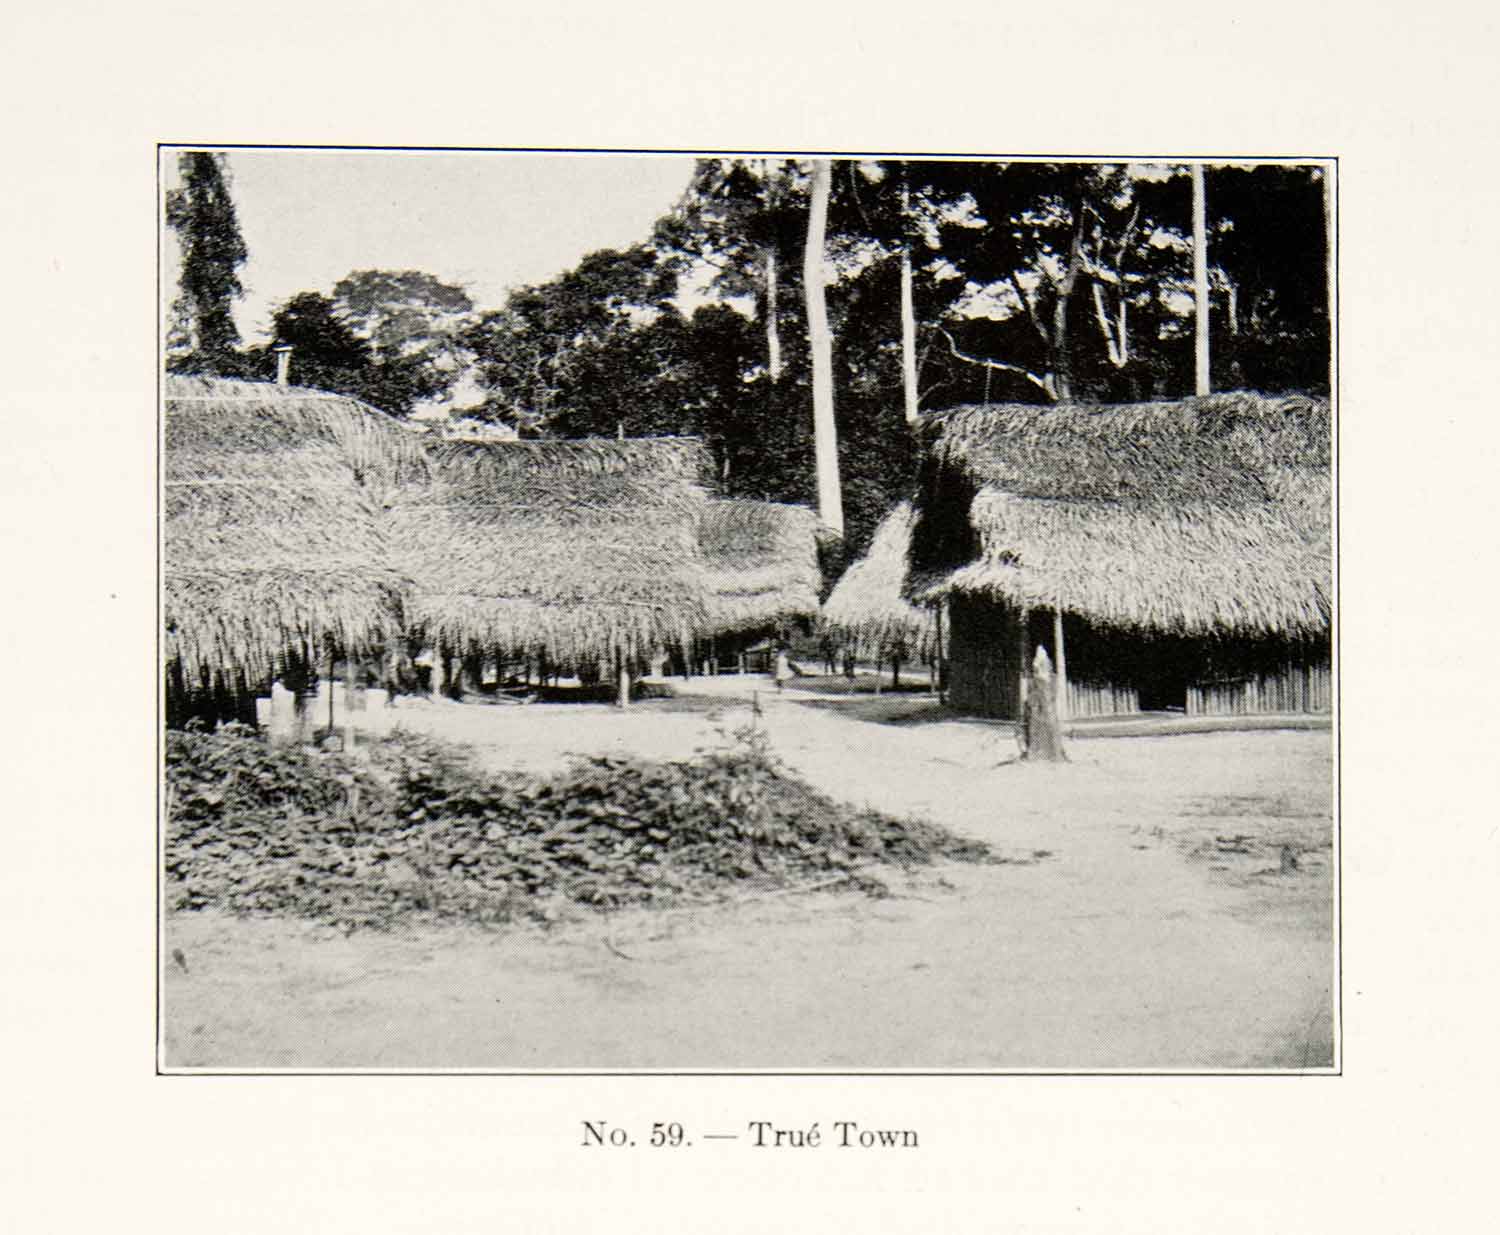 1930 Print True Town Liberia Africa Village Indigenous Huts Homes Houses XGEC4